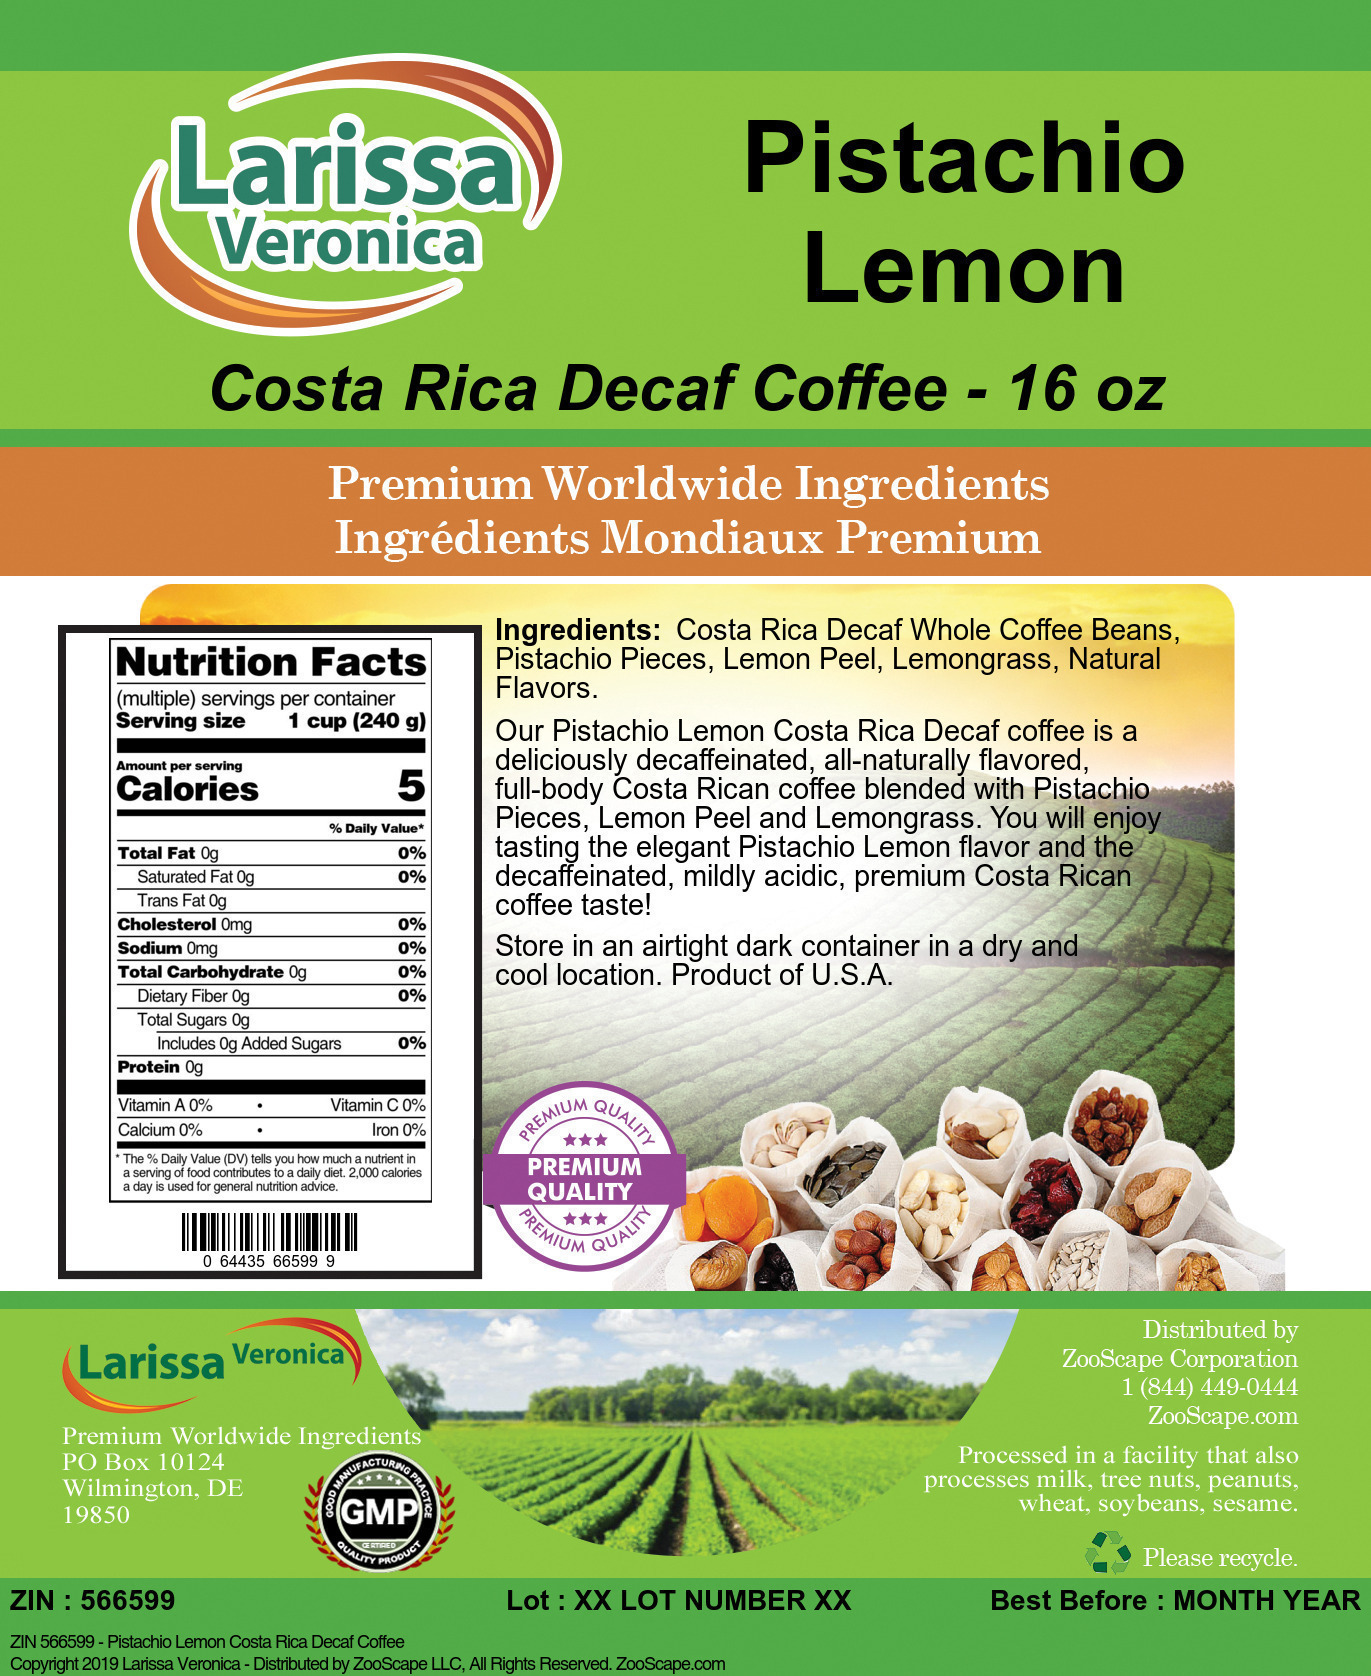 Pistachio Lemon Costa Rica Decaf Coffee - Label